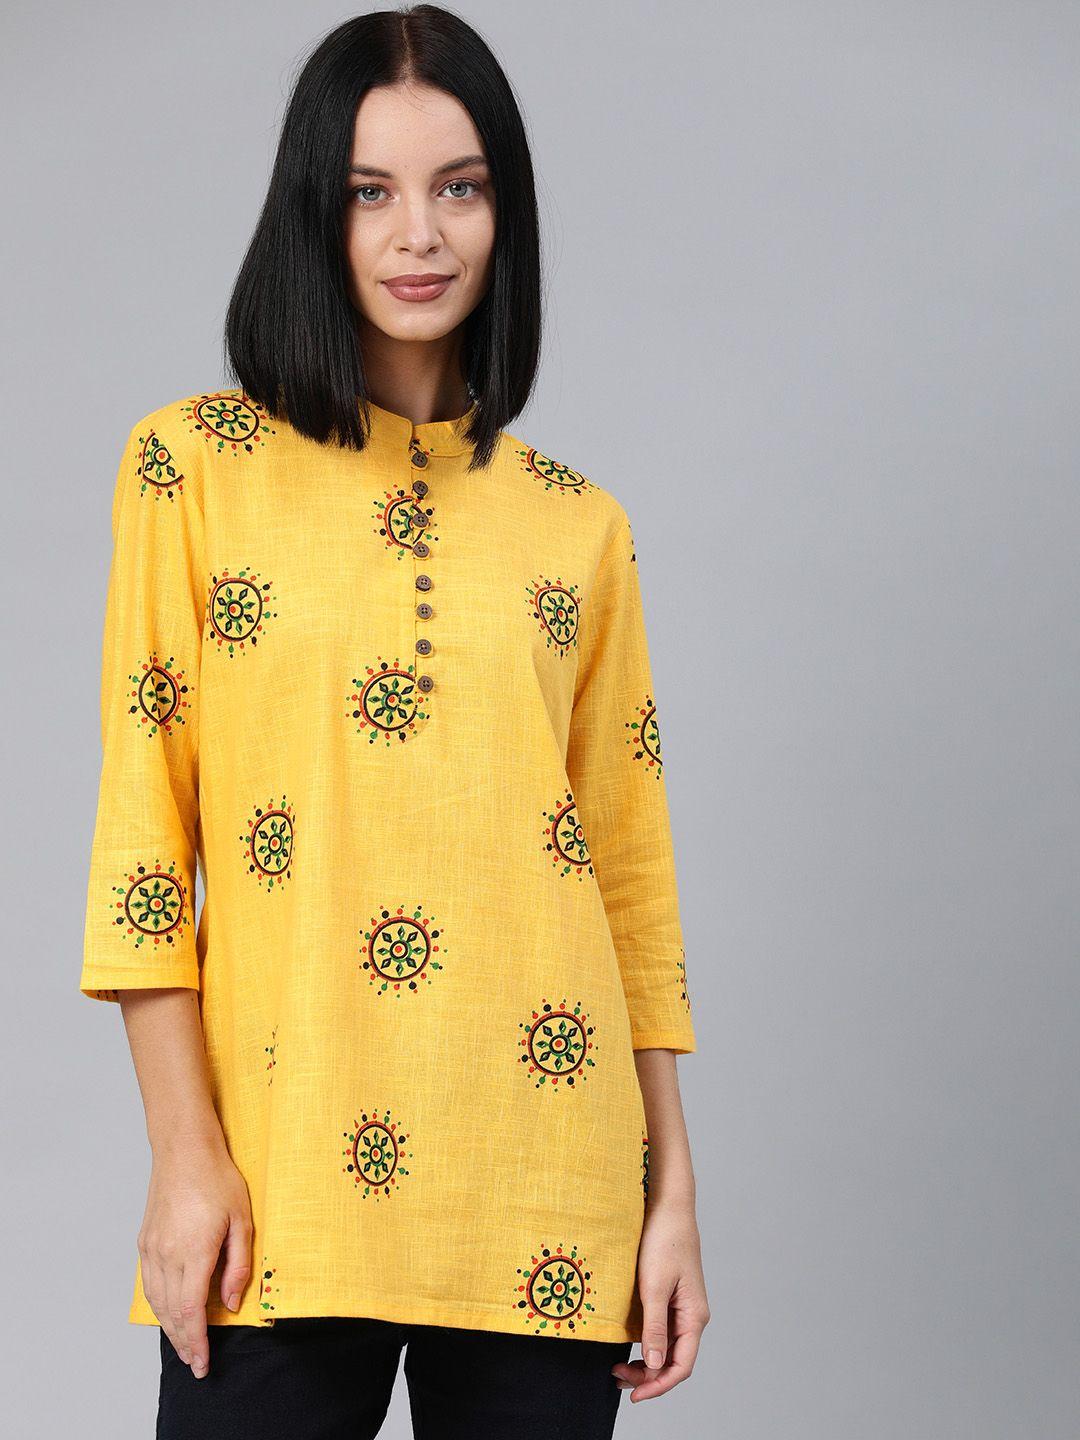 swishchick women's yellow ethnic printed tunic